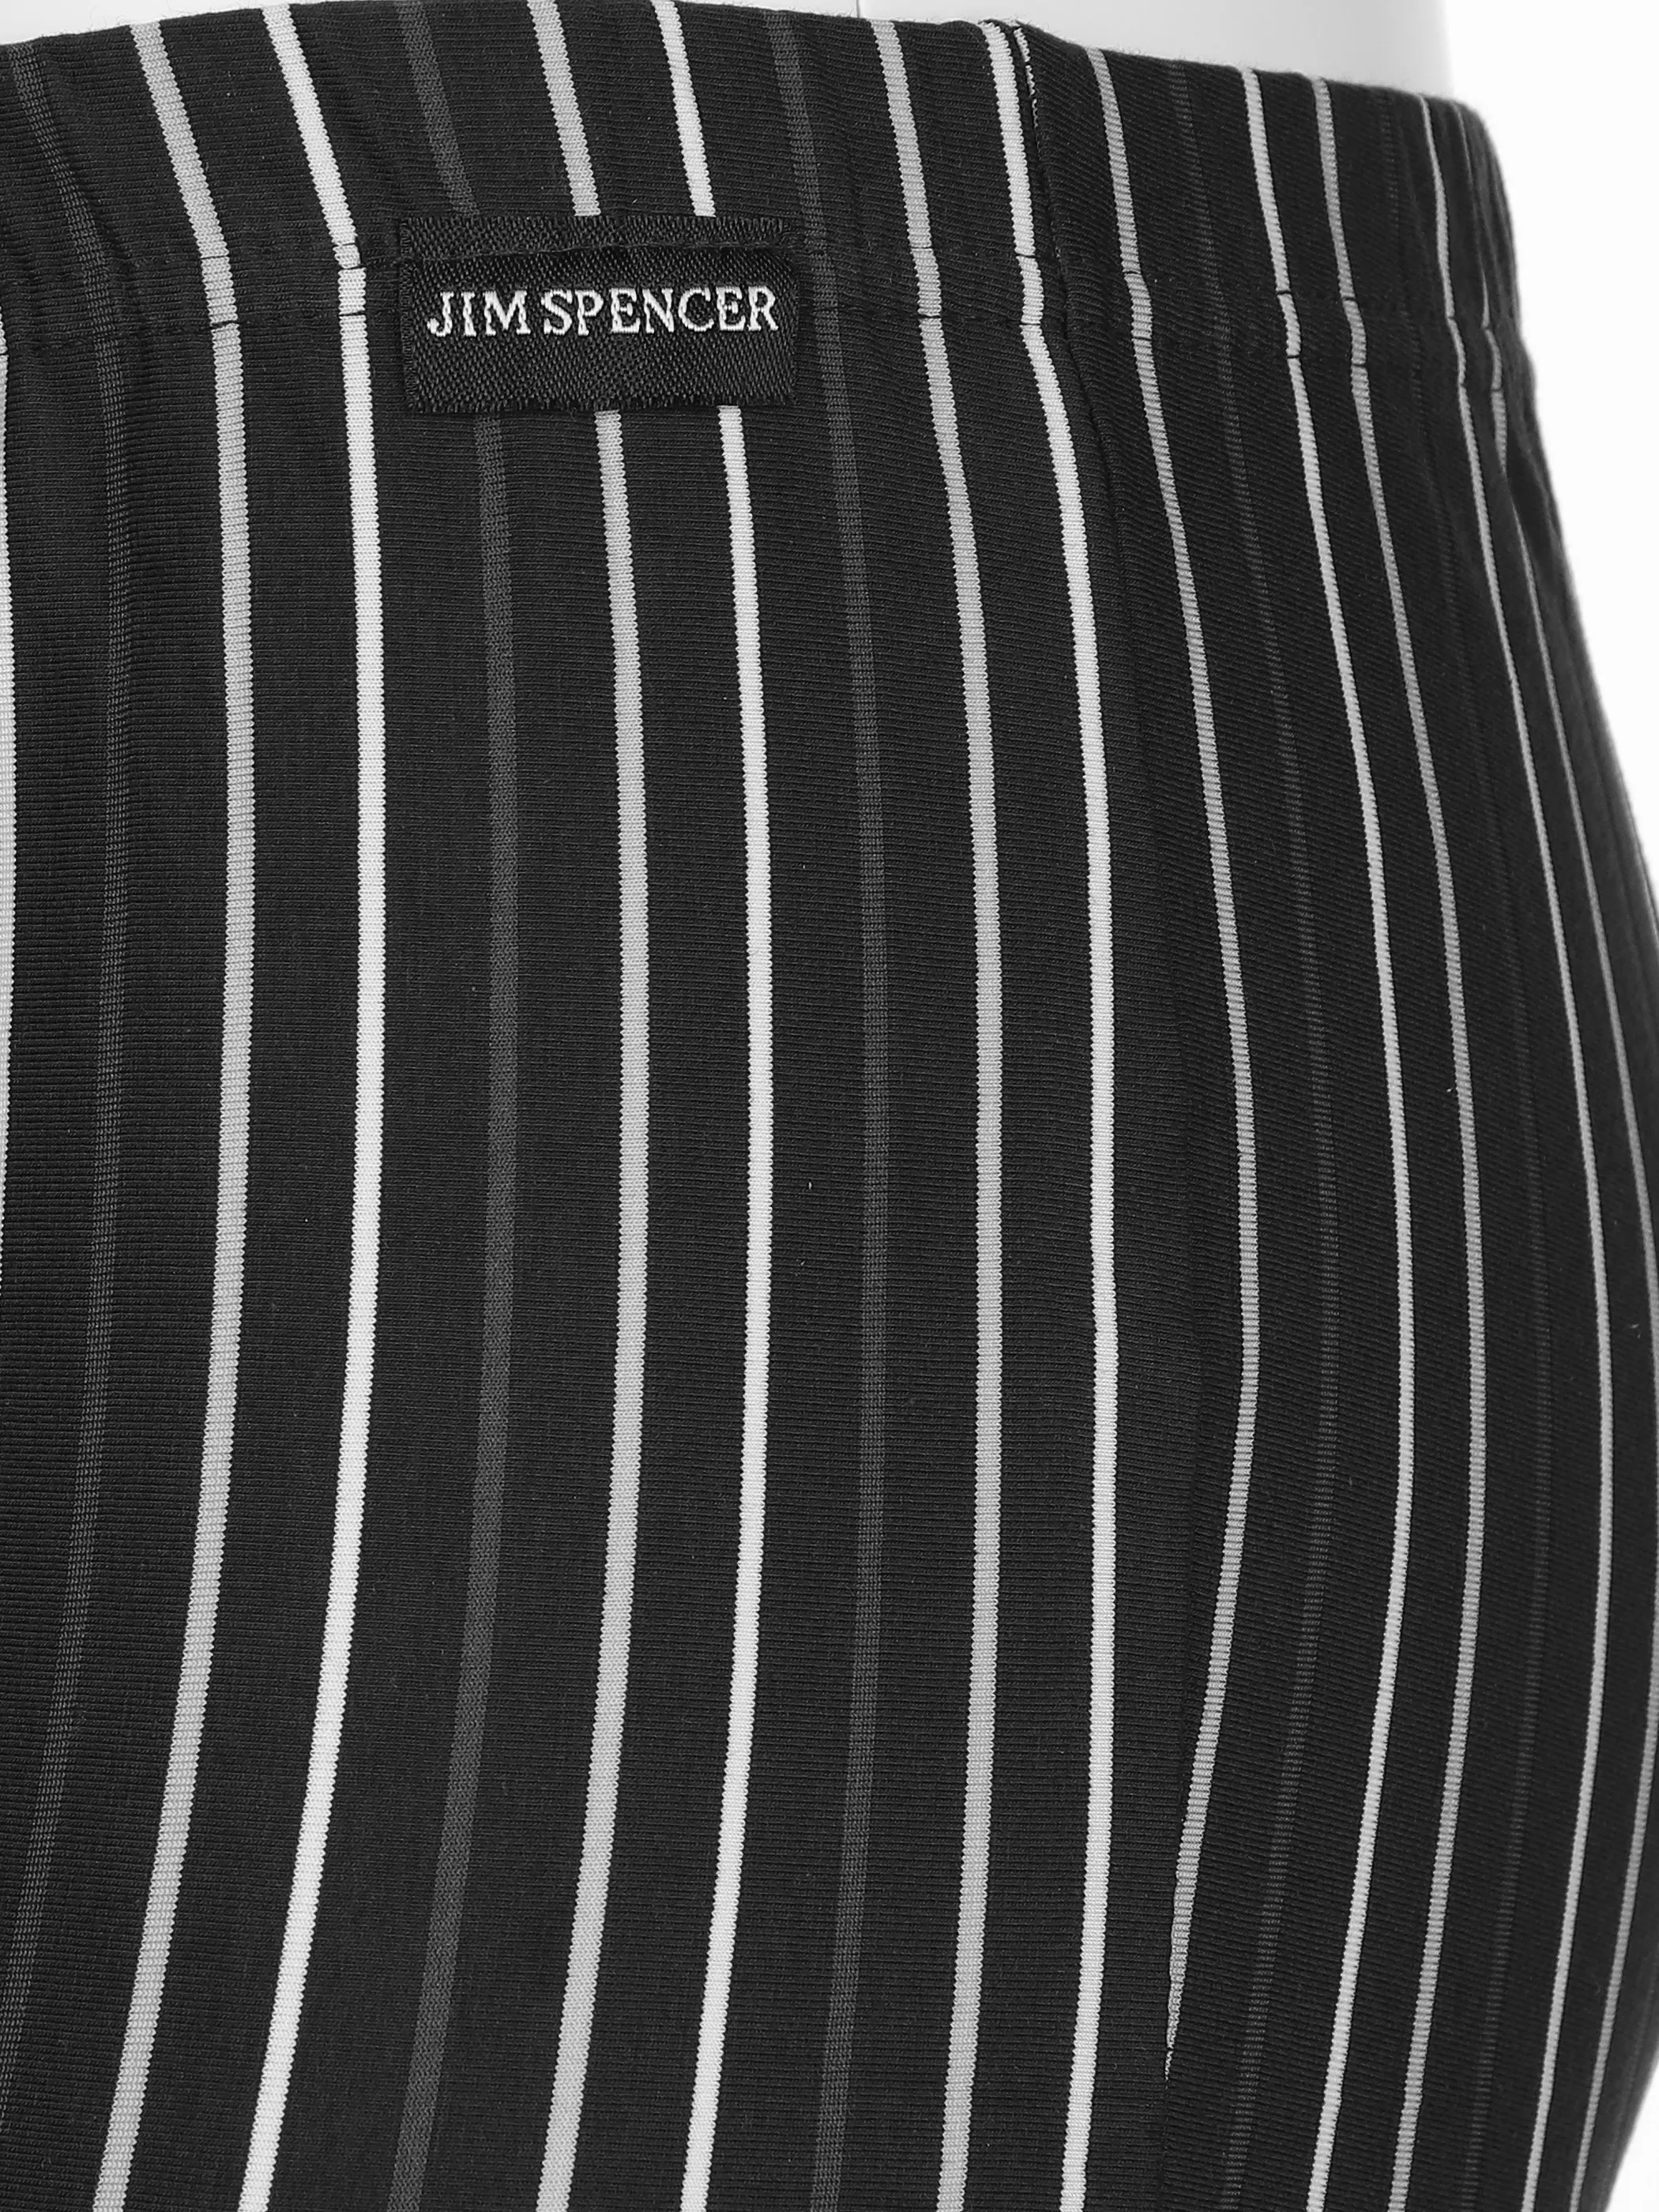 Jim Spencer He-Retro 2er Pack Schwarz 720071 017SCHWARZ 3